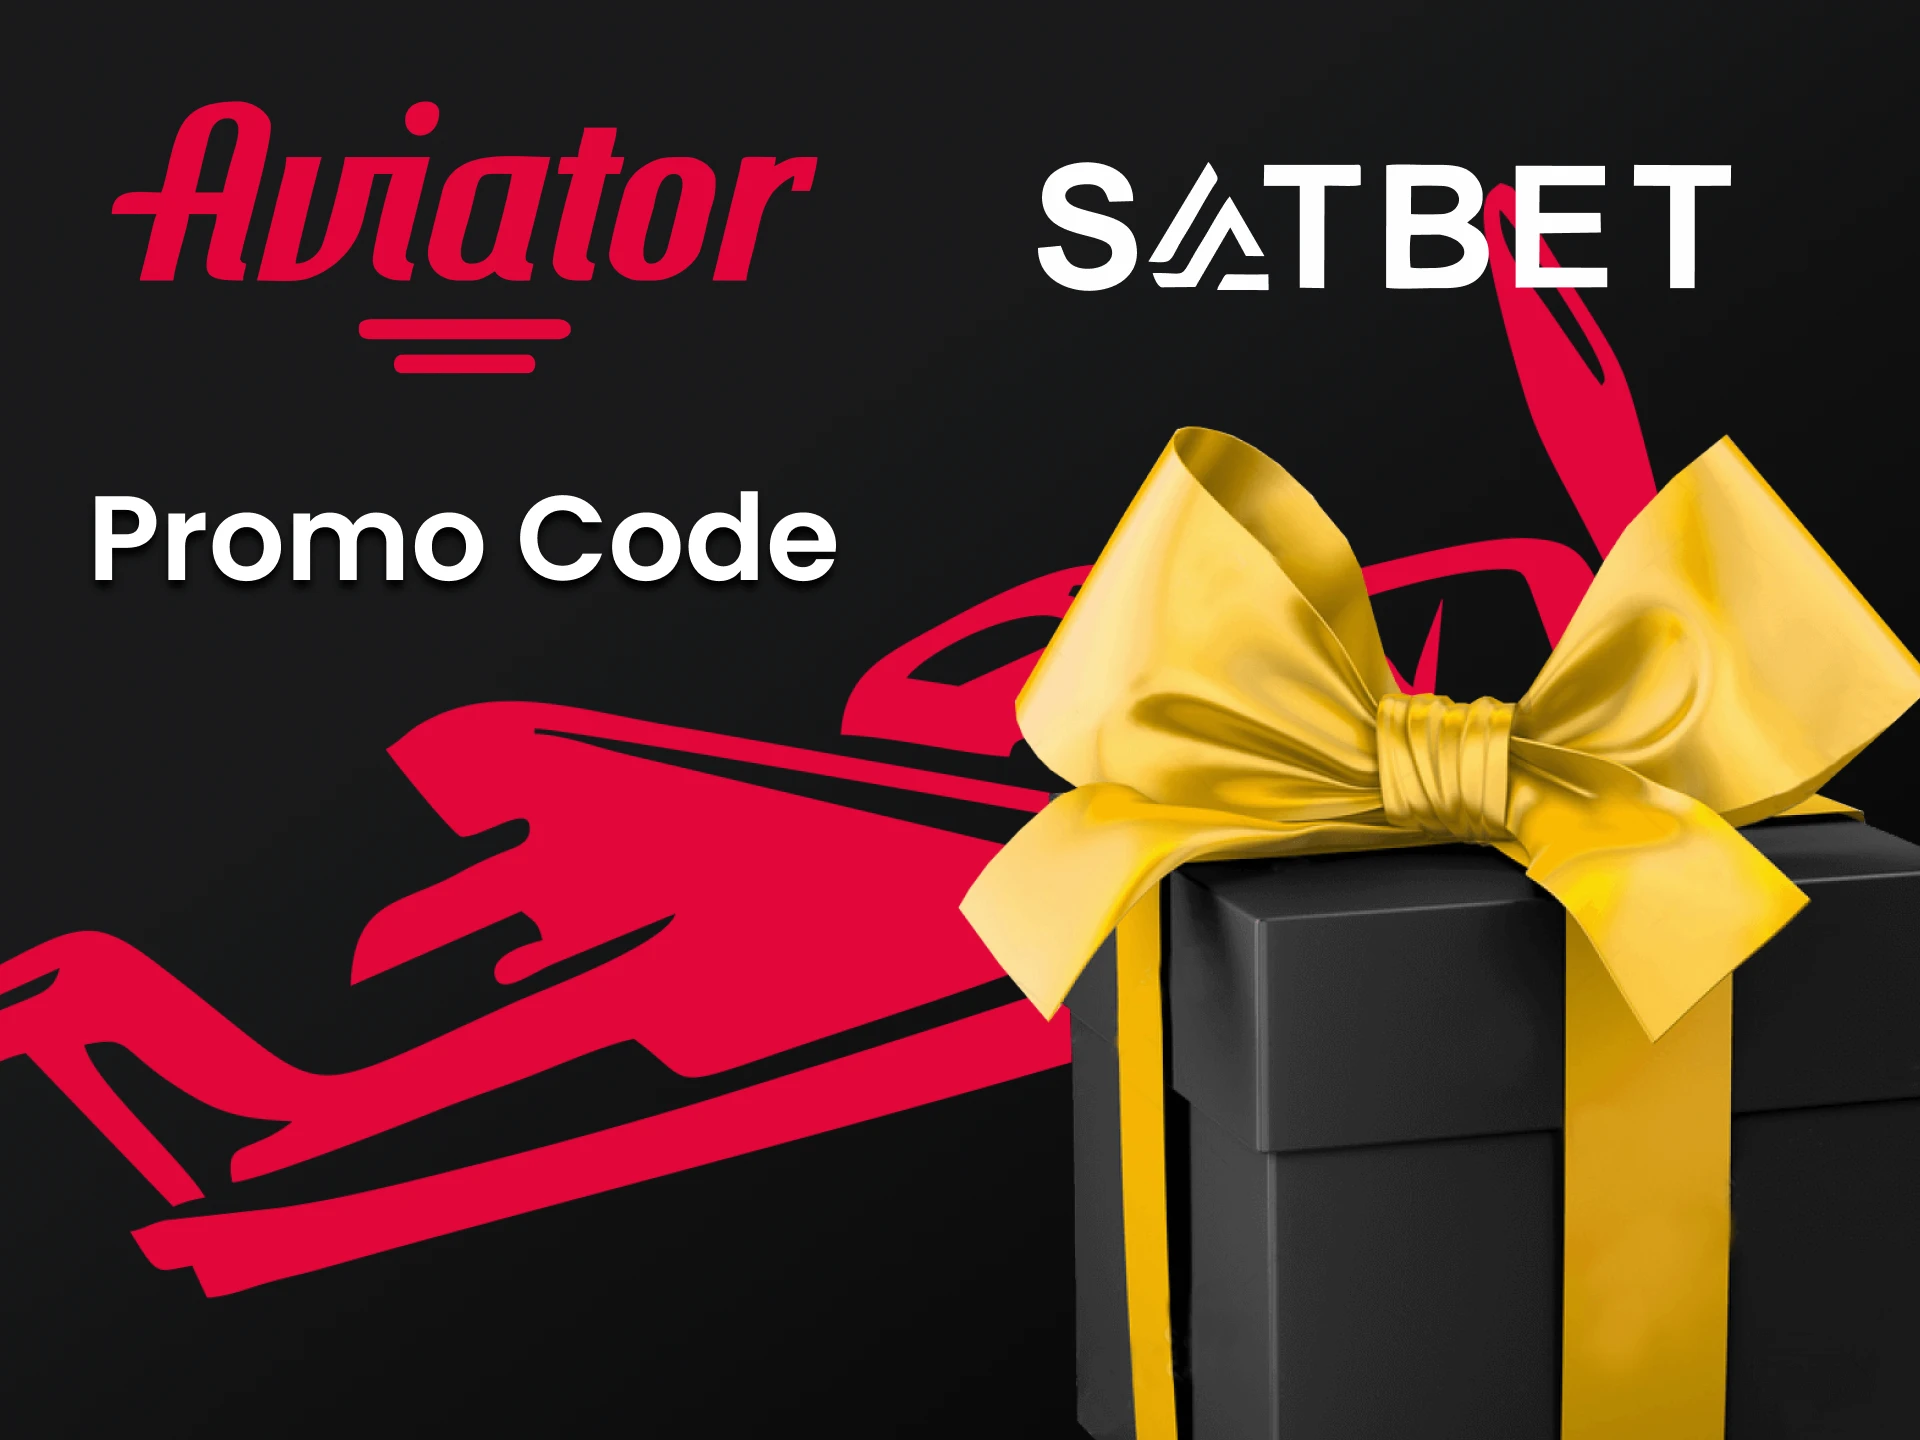 Use bonus code for Aviator from Satbet.